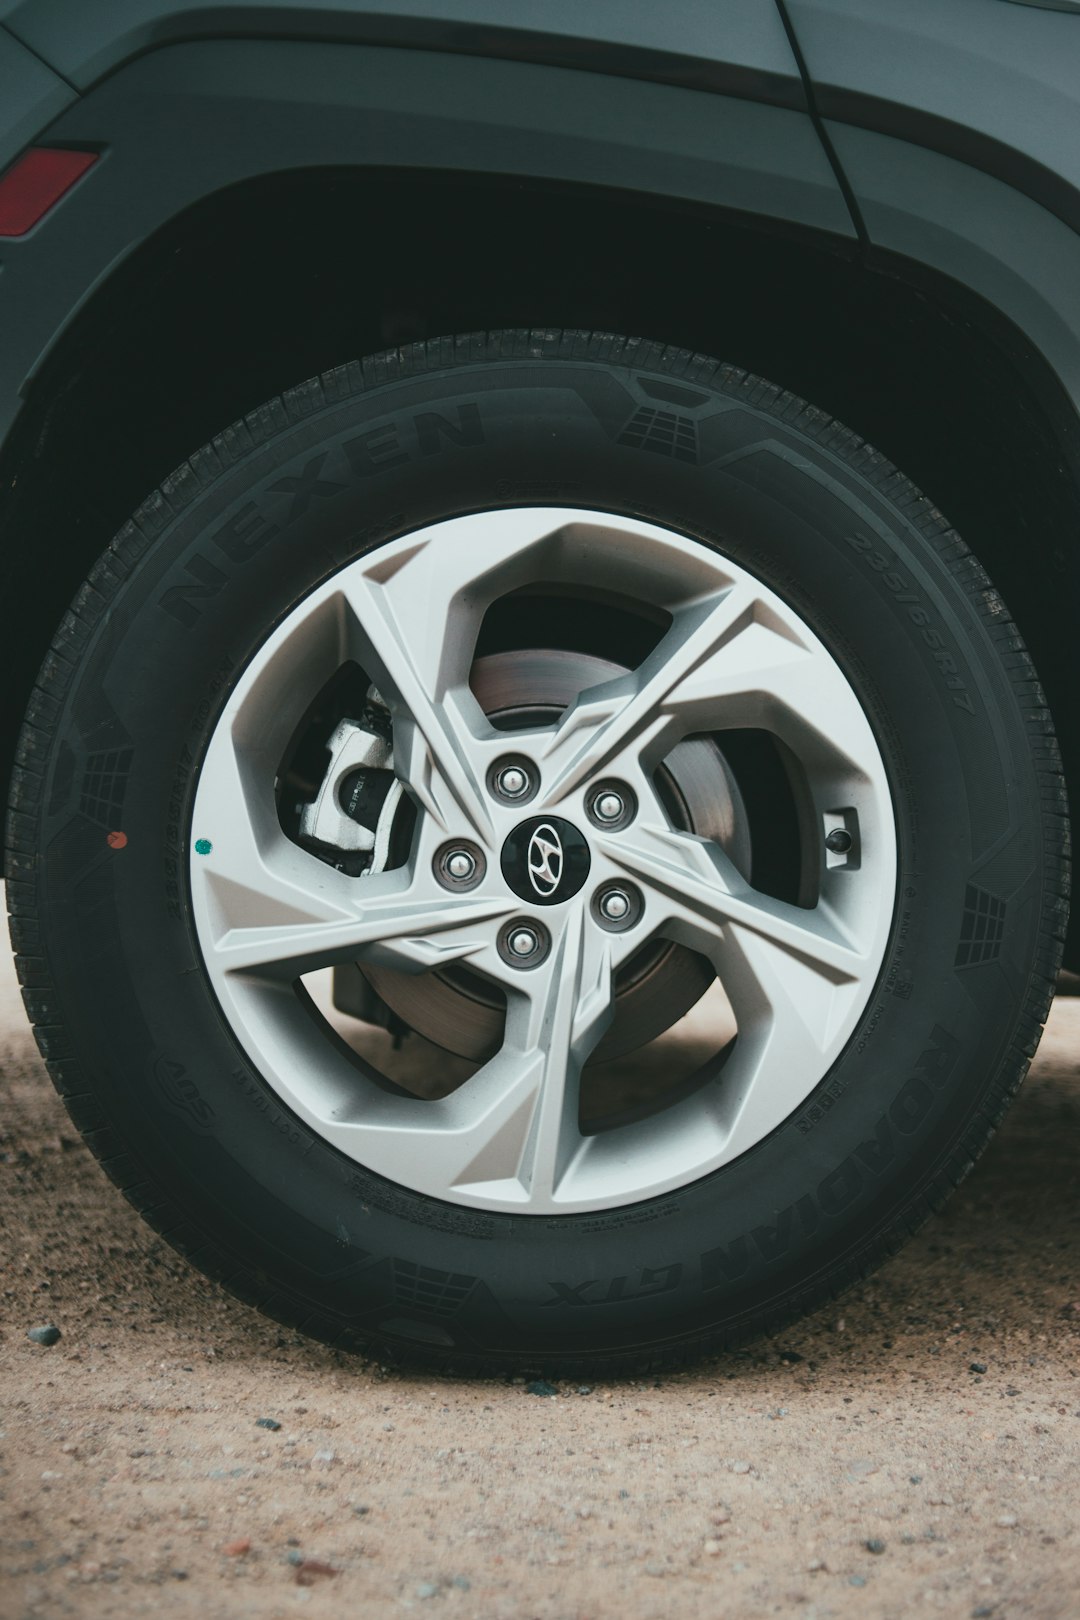 silver 5 spoke car wheel with tire